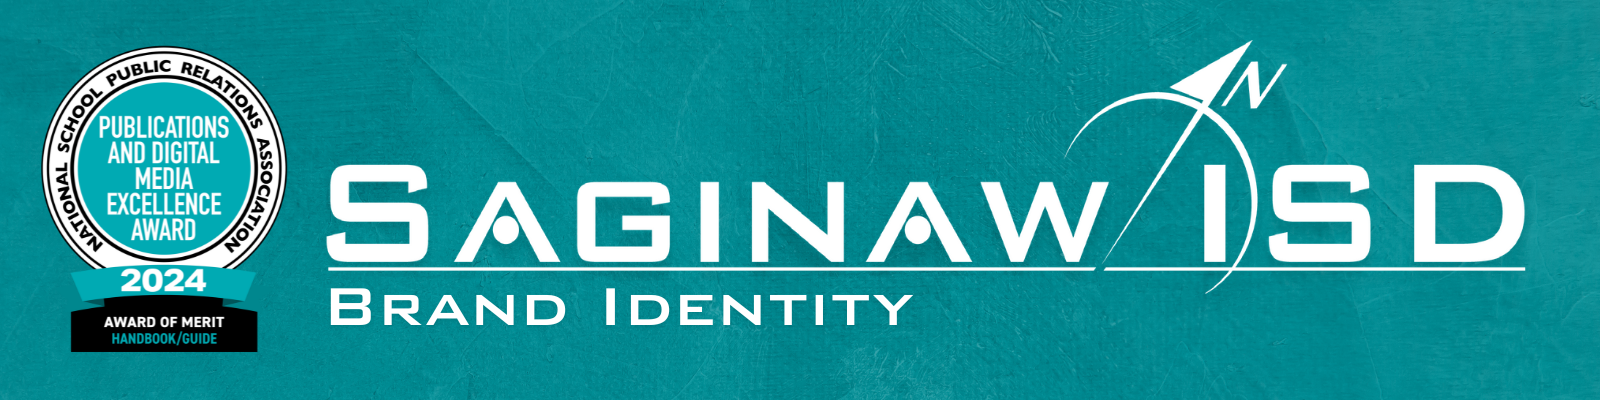 Saginaw ISD Brand Identity